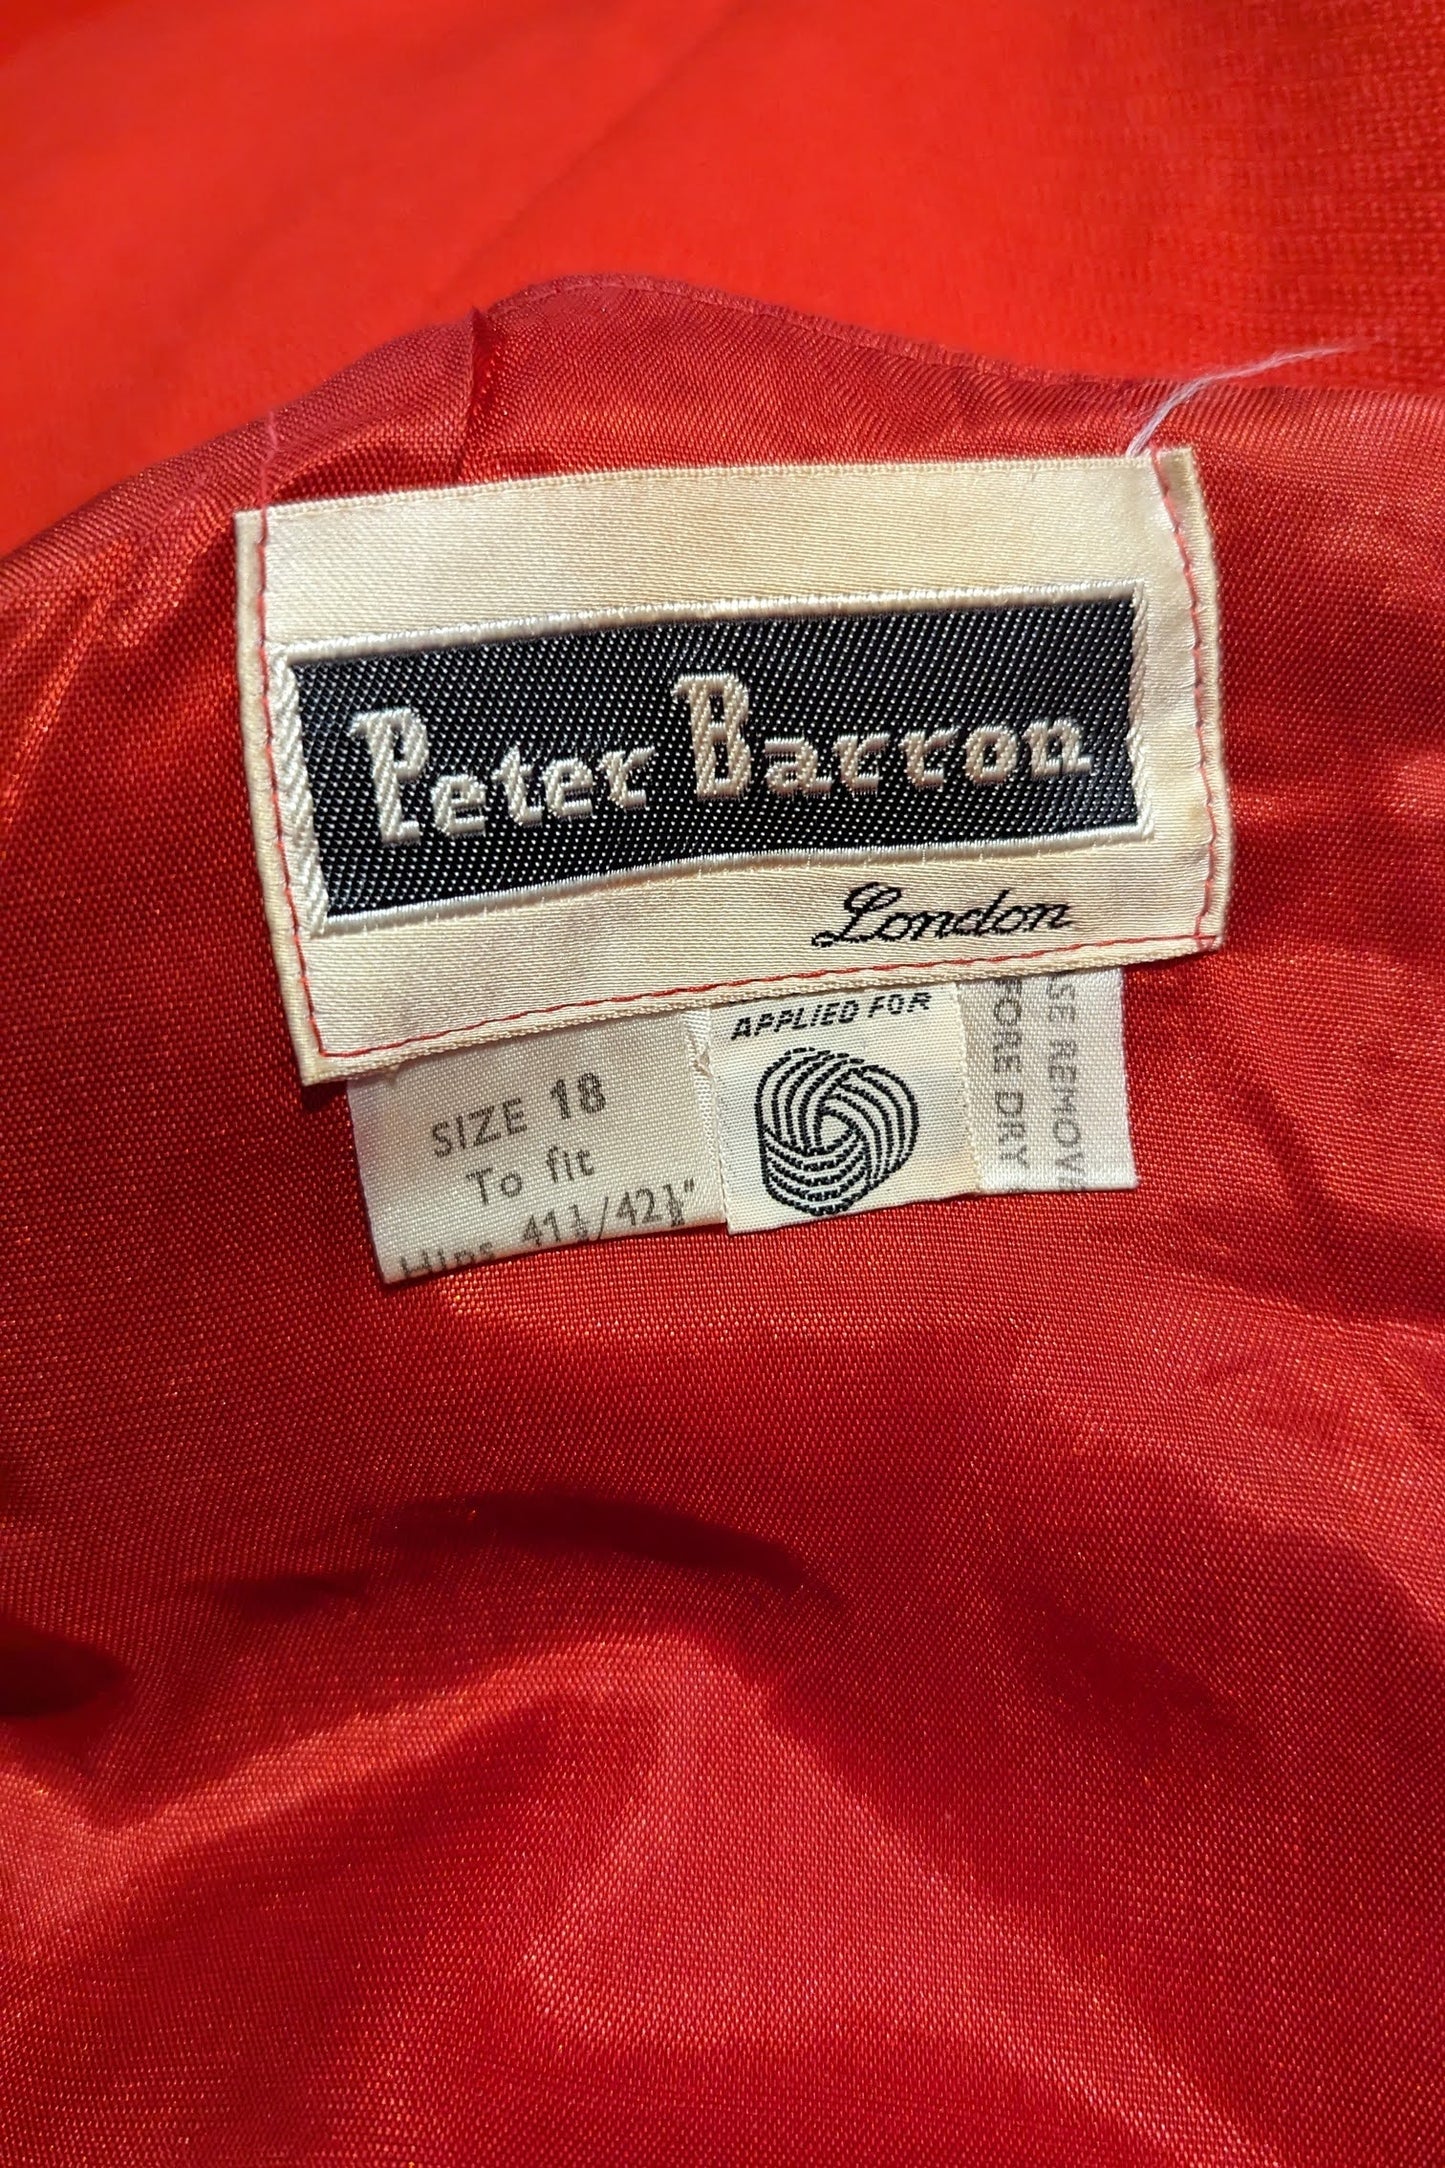 Peter Barron made in London wool dress